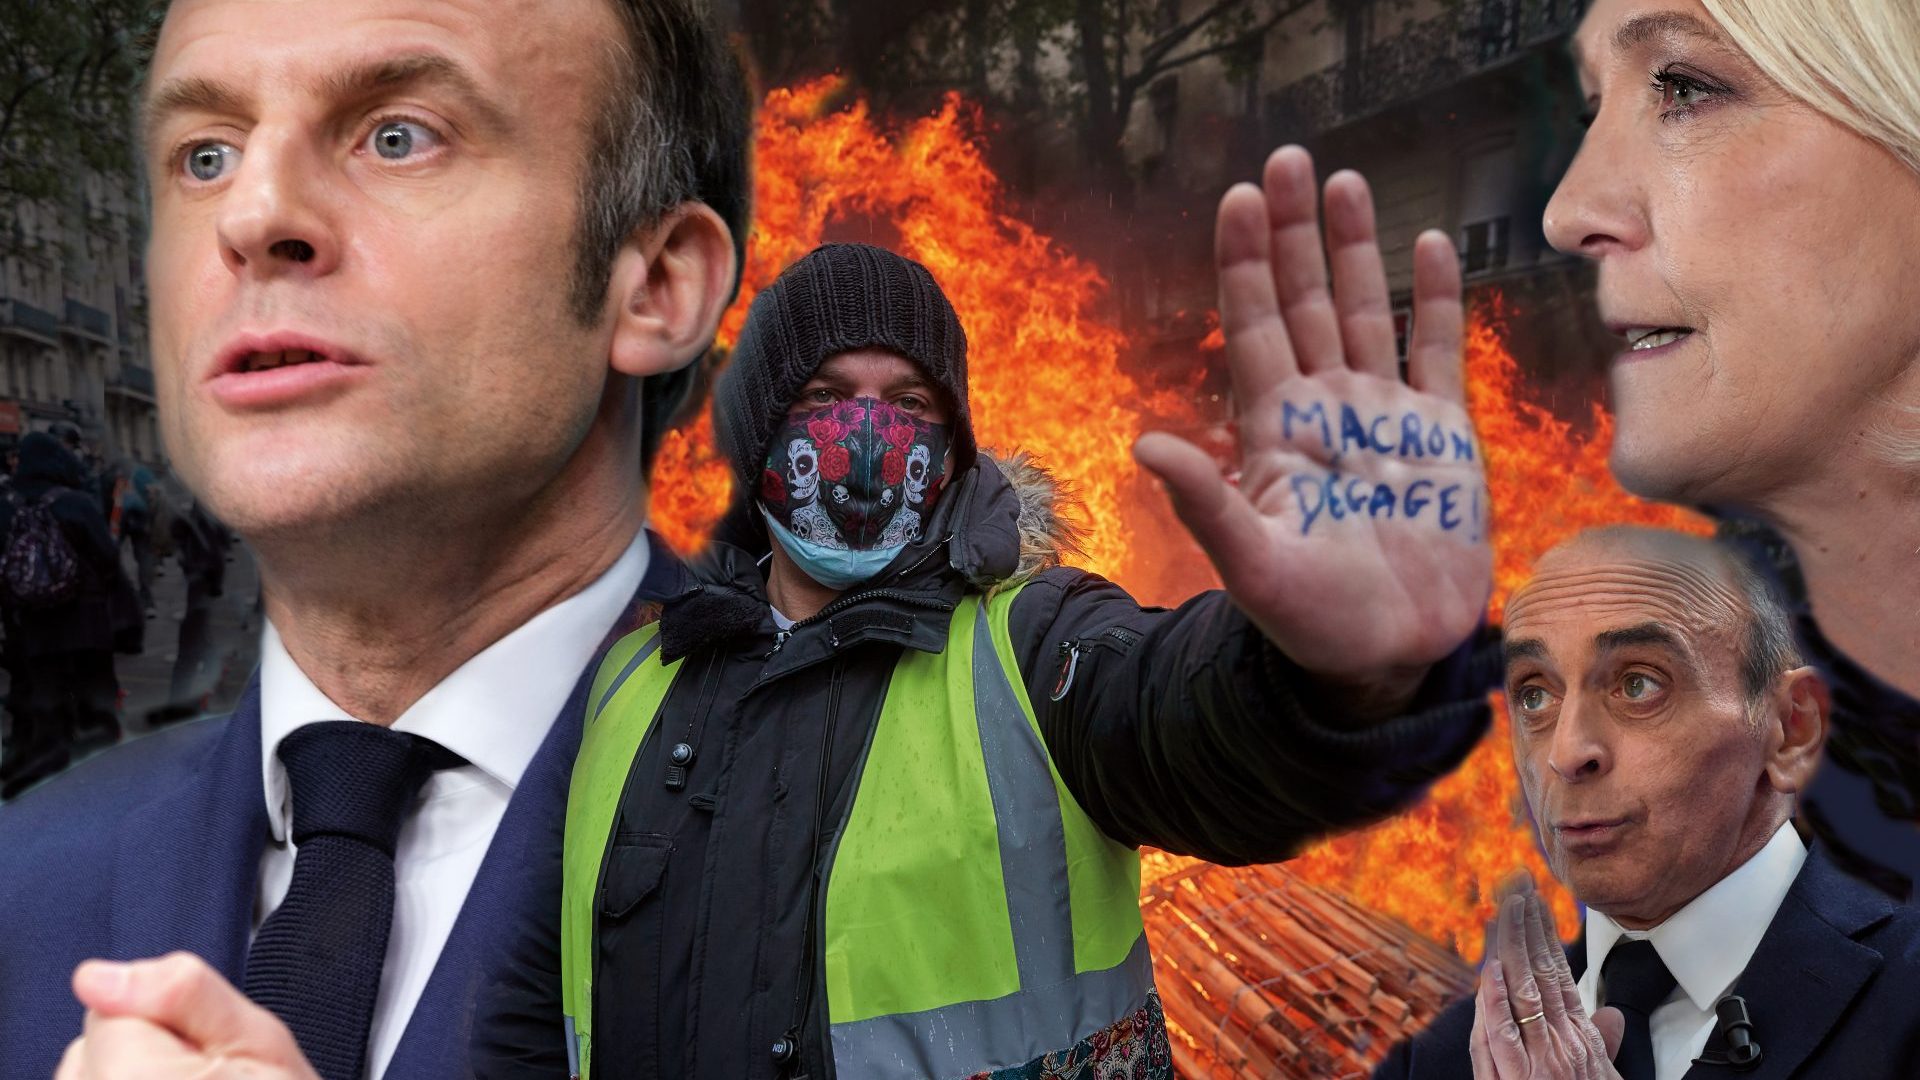 Emmanuel Macron, Marine Le Pen, Eric Zemmour and a yellow vest 
demonstrator demanding Macron 
resigns. Montage: The New European